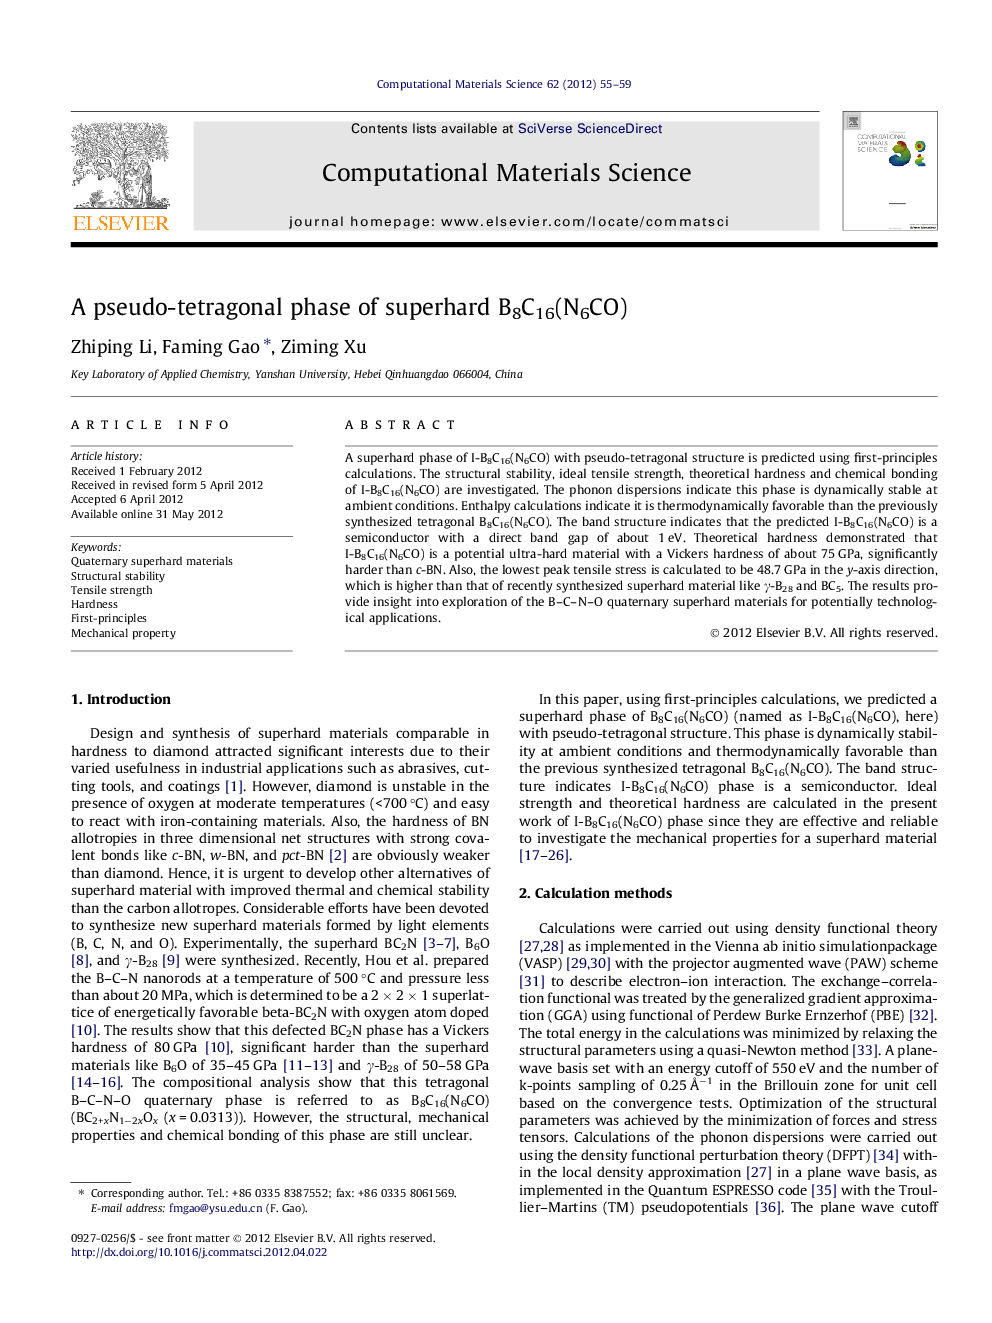 A pseudo-tetragonal phase of superhard B8C16(N6CO)